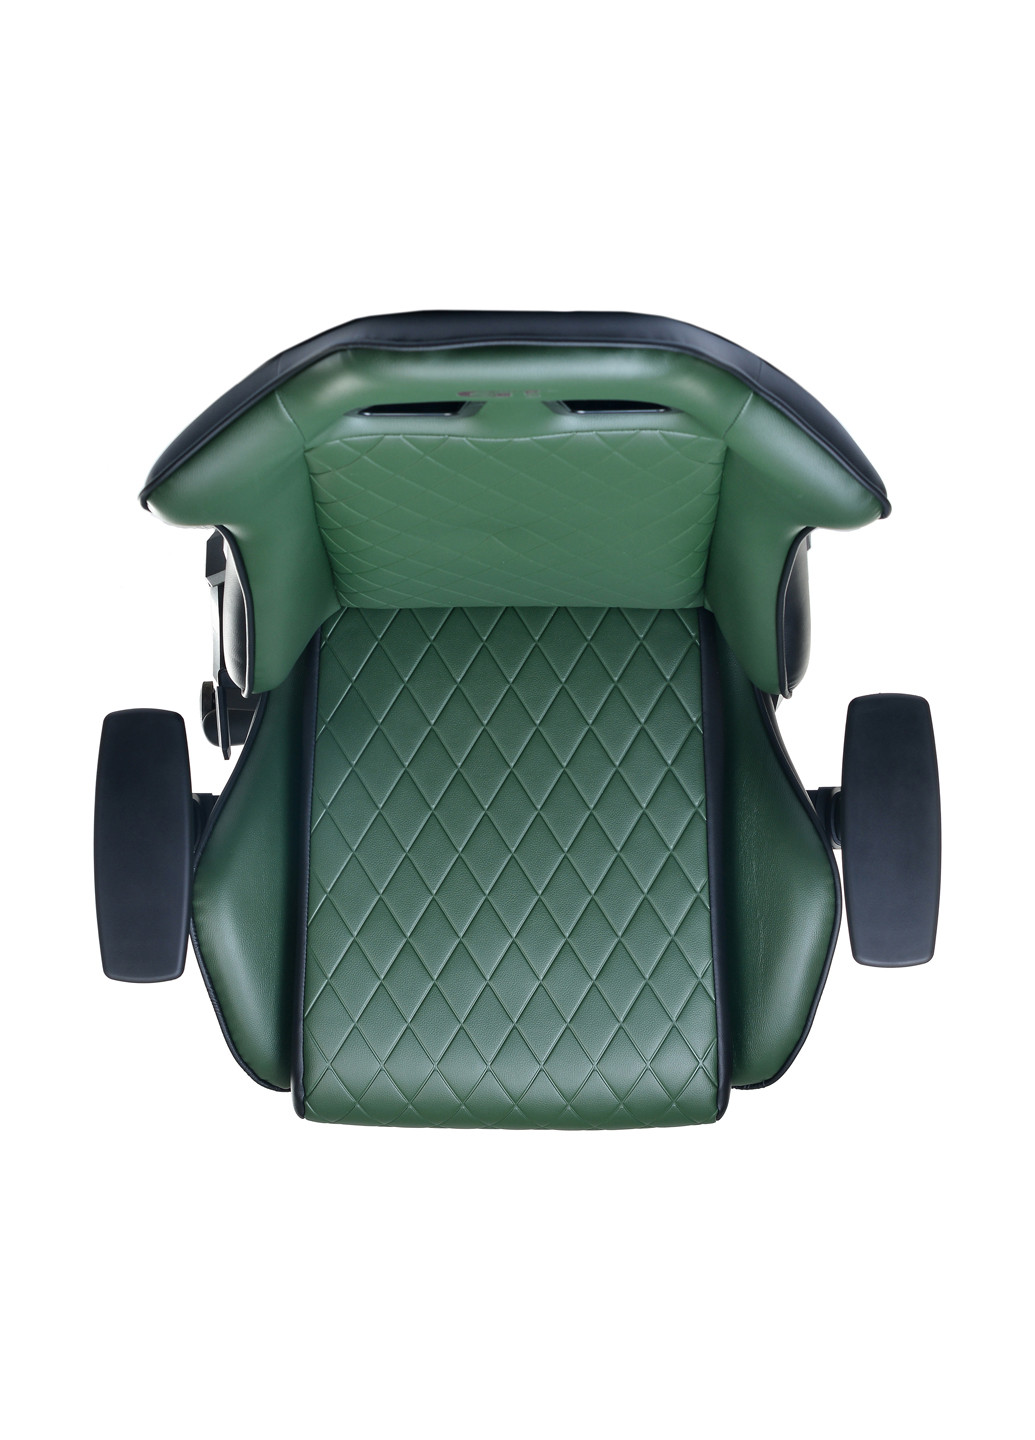 Геймерское кресло GT Racer x-2540 black/dark green (184833910)